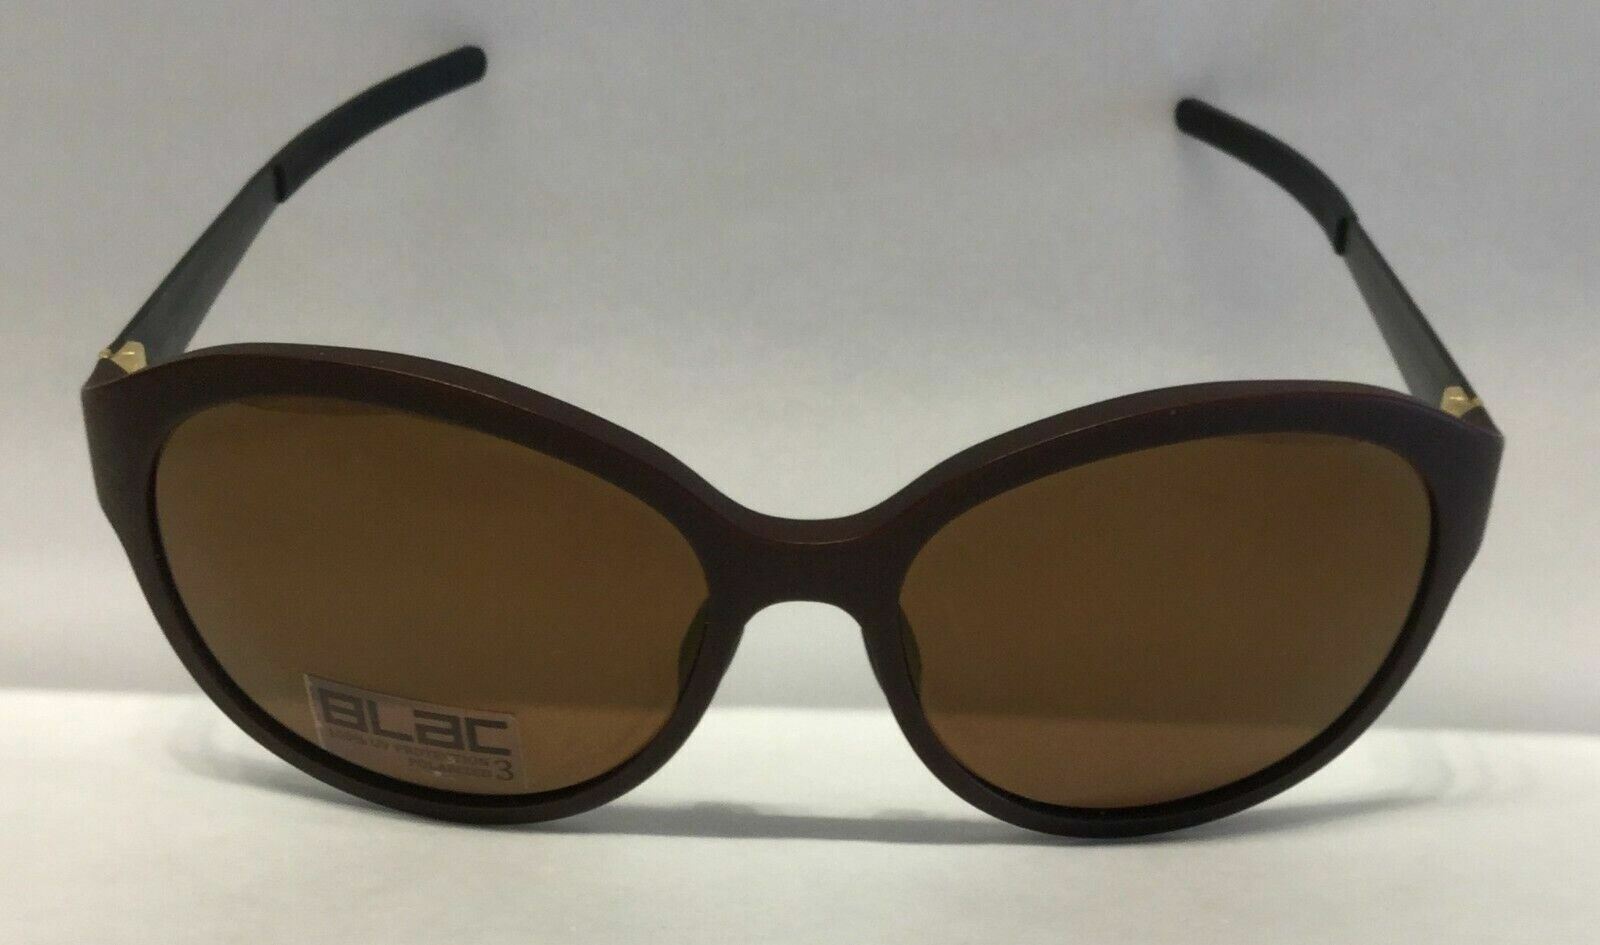 Blac Carbon Fiber Burgundy/Black Mirrored Sunglasses